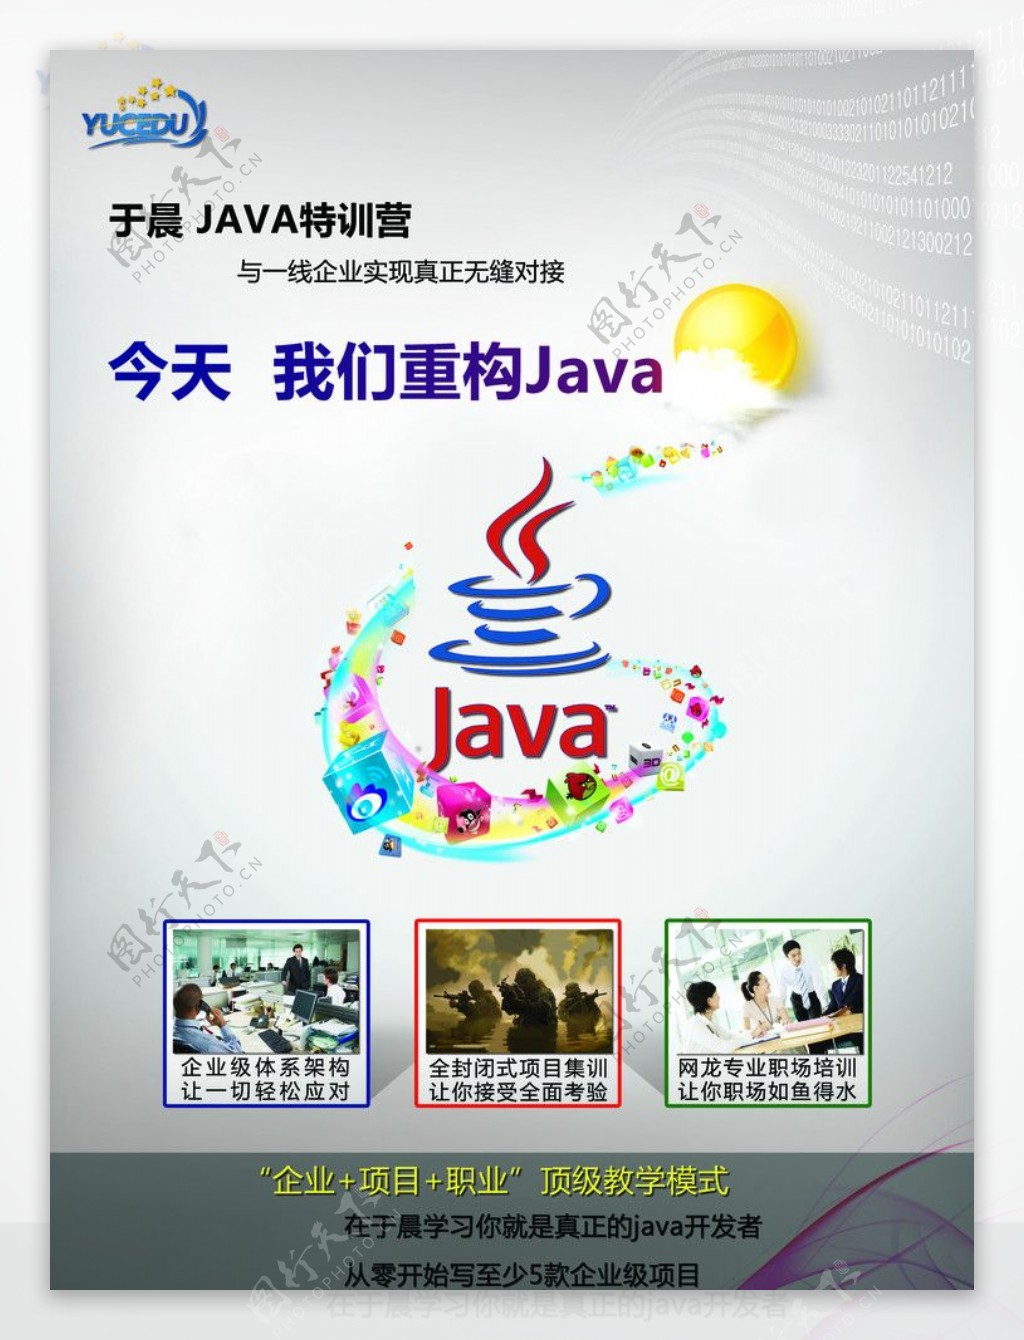 Java海报